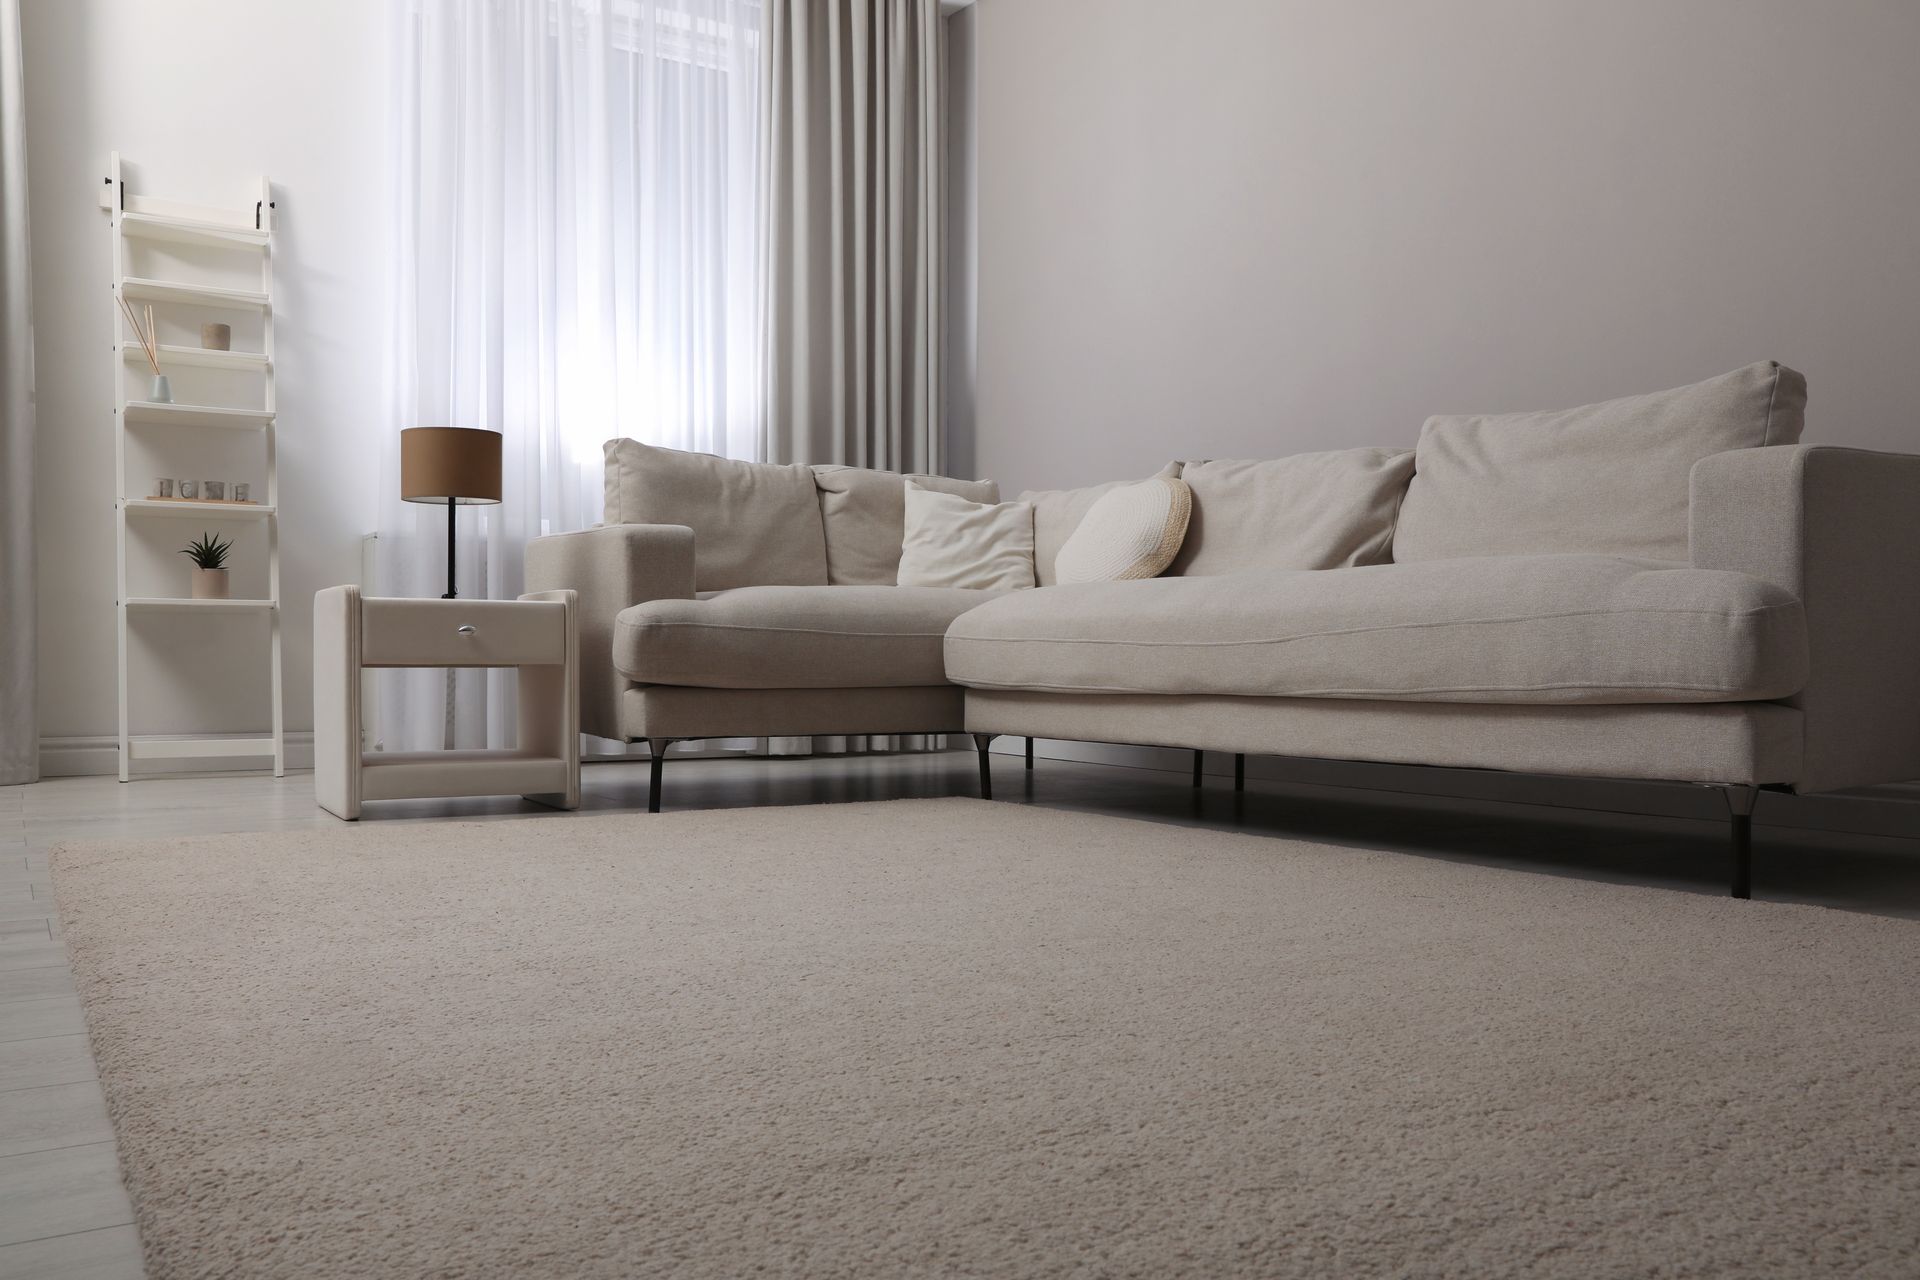 stylish interior living room with comfortable sofa